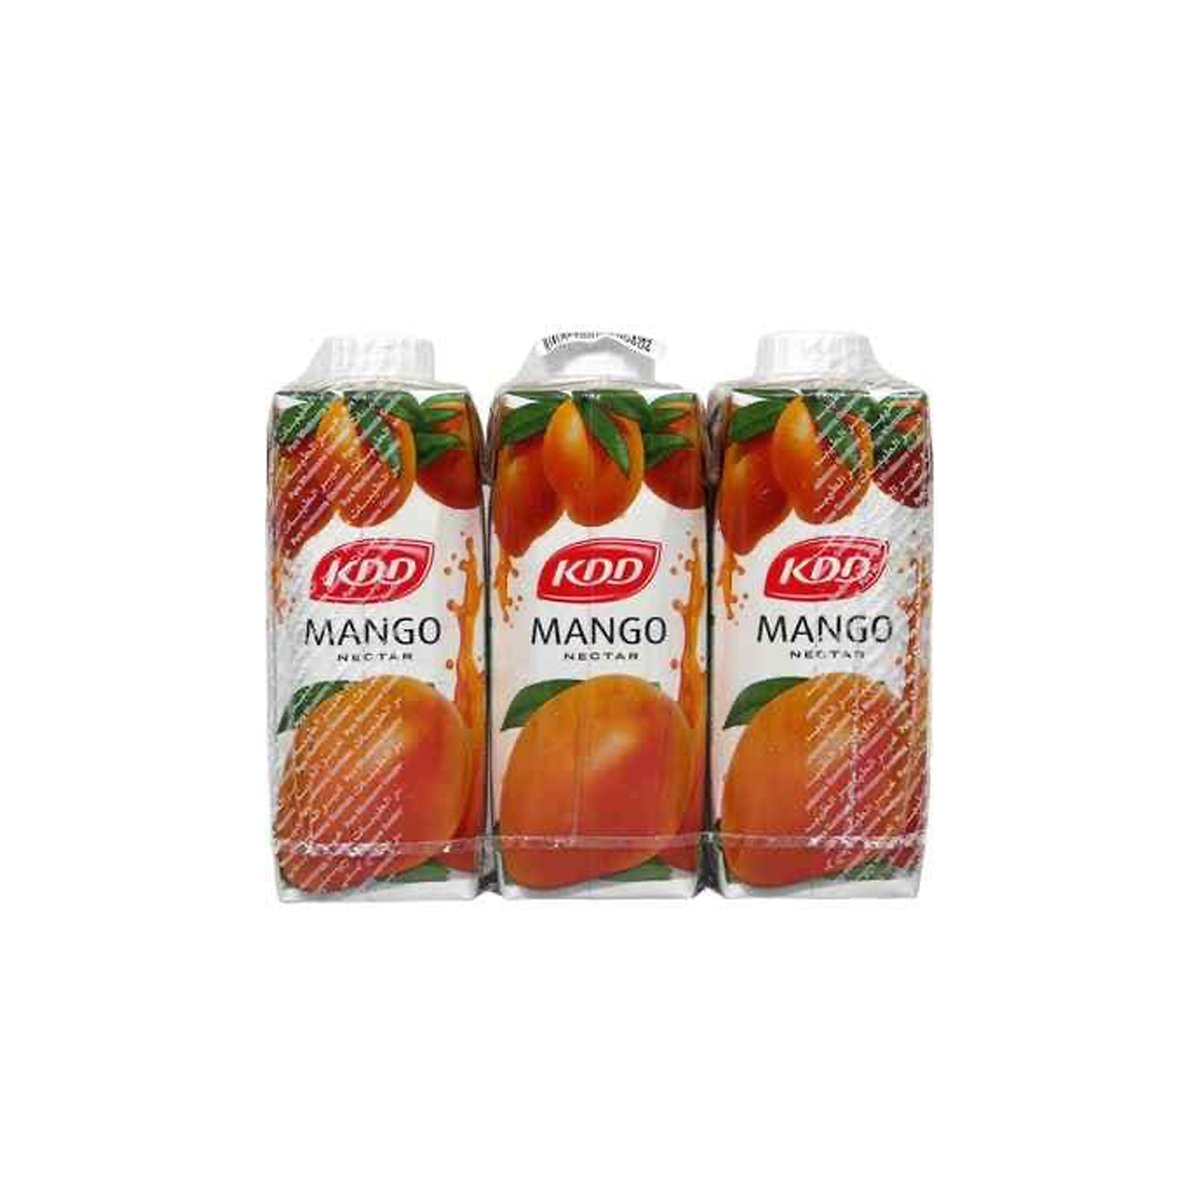 KDD Mango Nectar 250ml